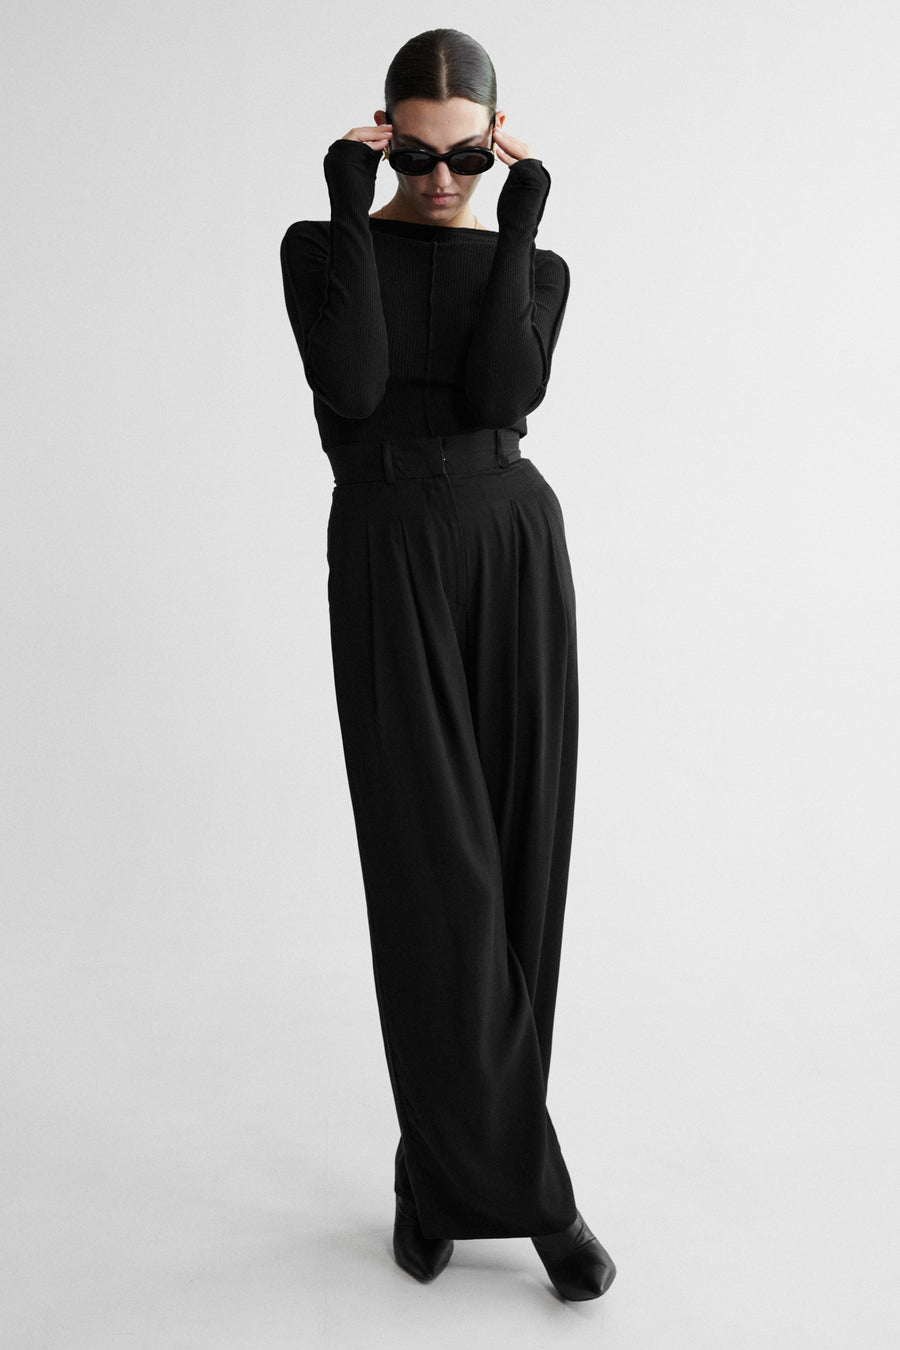 Longsleeve in organic cotton / 14 / 02 / onyx black *tencel-trousers-05-02-onyx-black* ?The model is 178 cm tall and wears size XS?